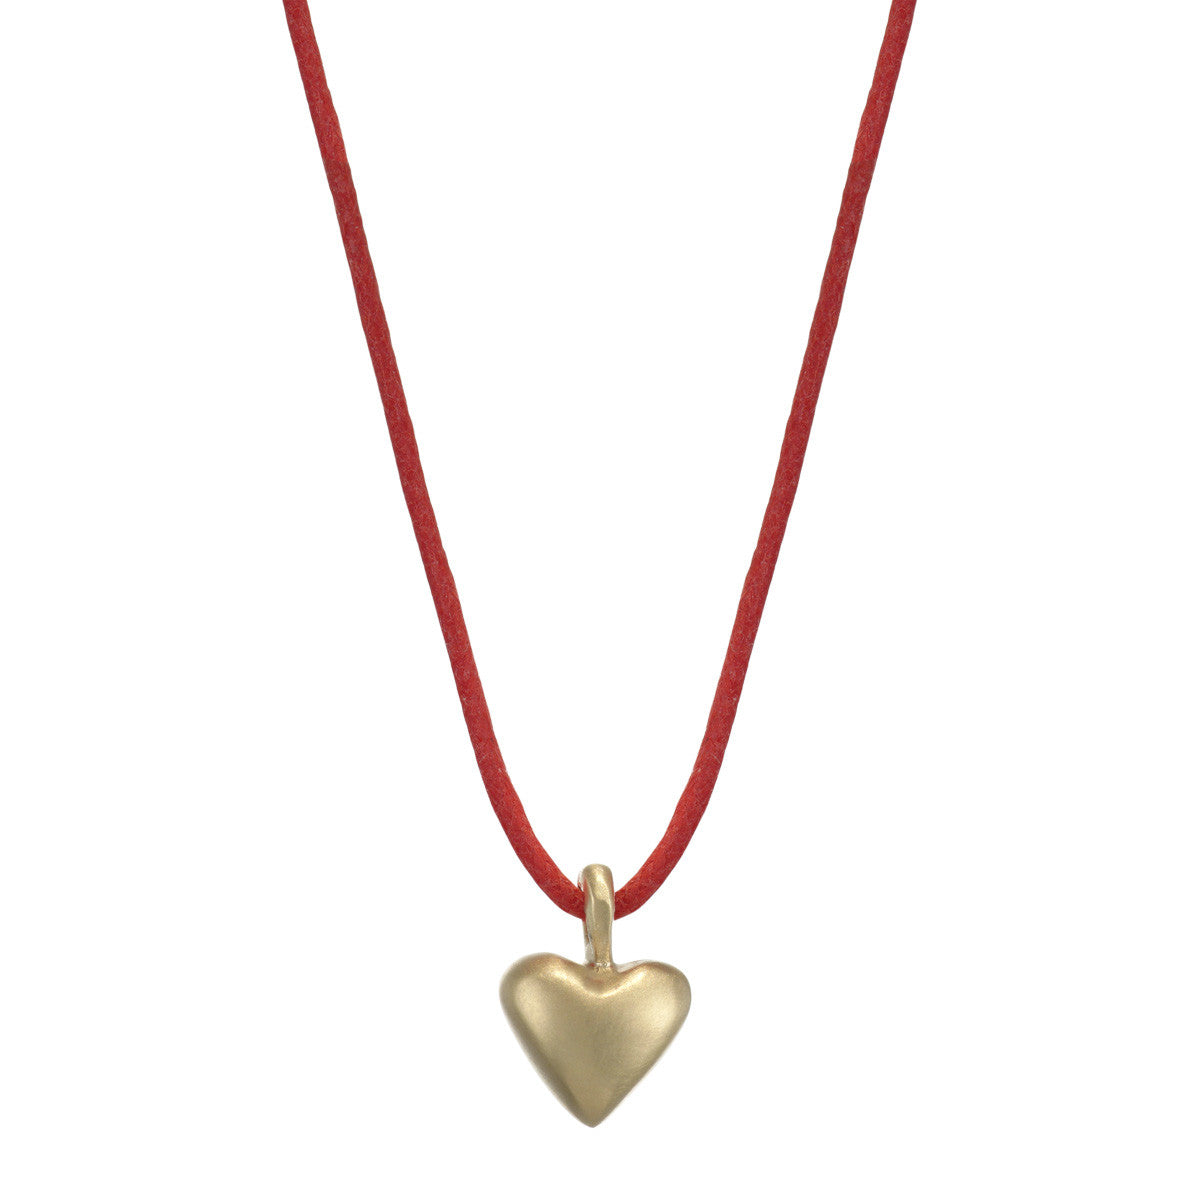 10K Gold Medium Heart Pendant on Red Cord